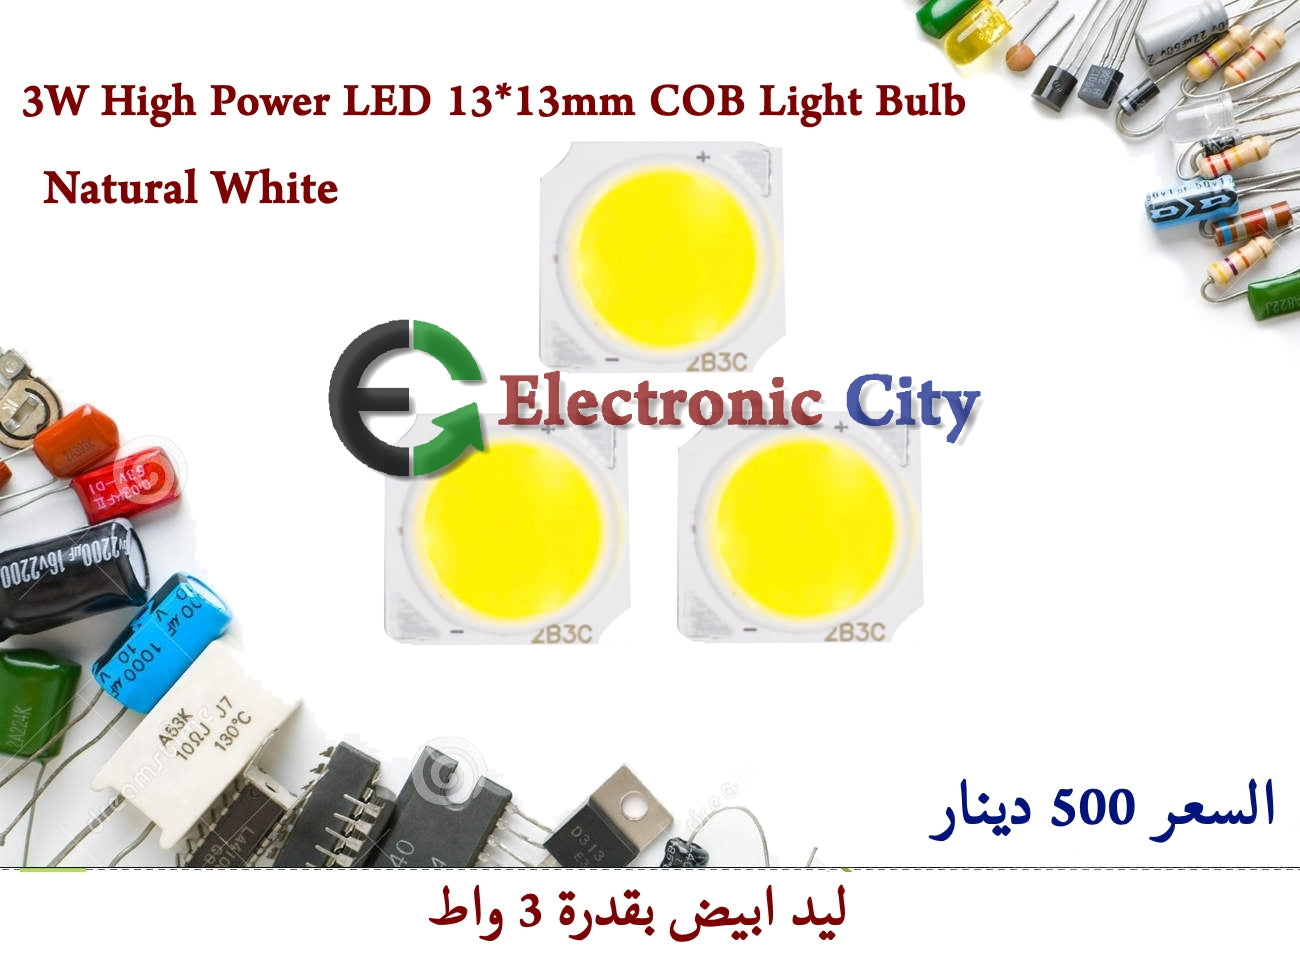 3W High Power LED 13X13mm COB Light Bulb Natural White